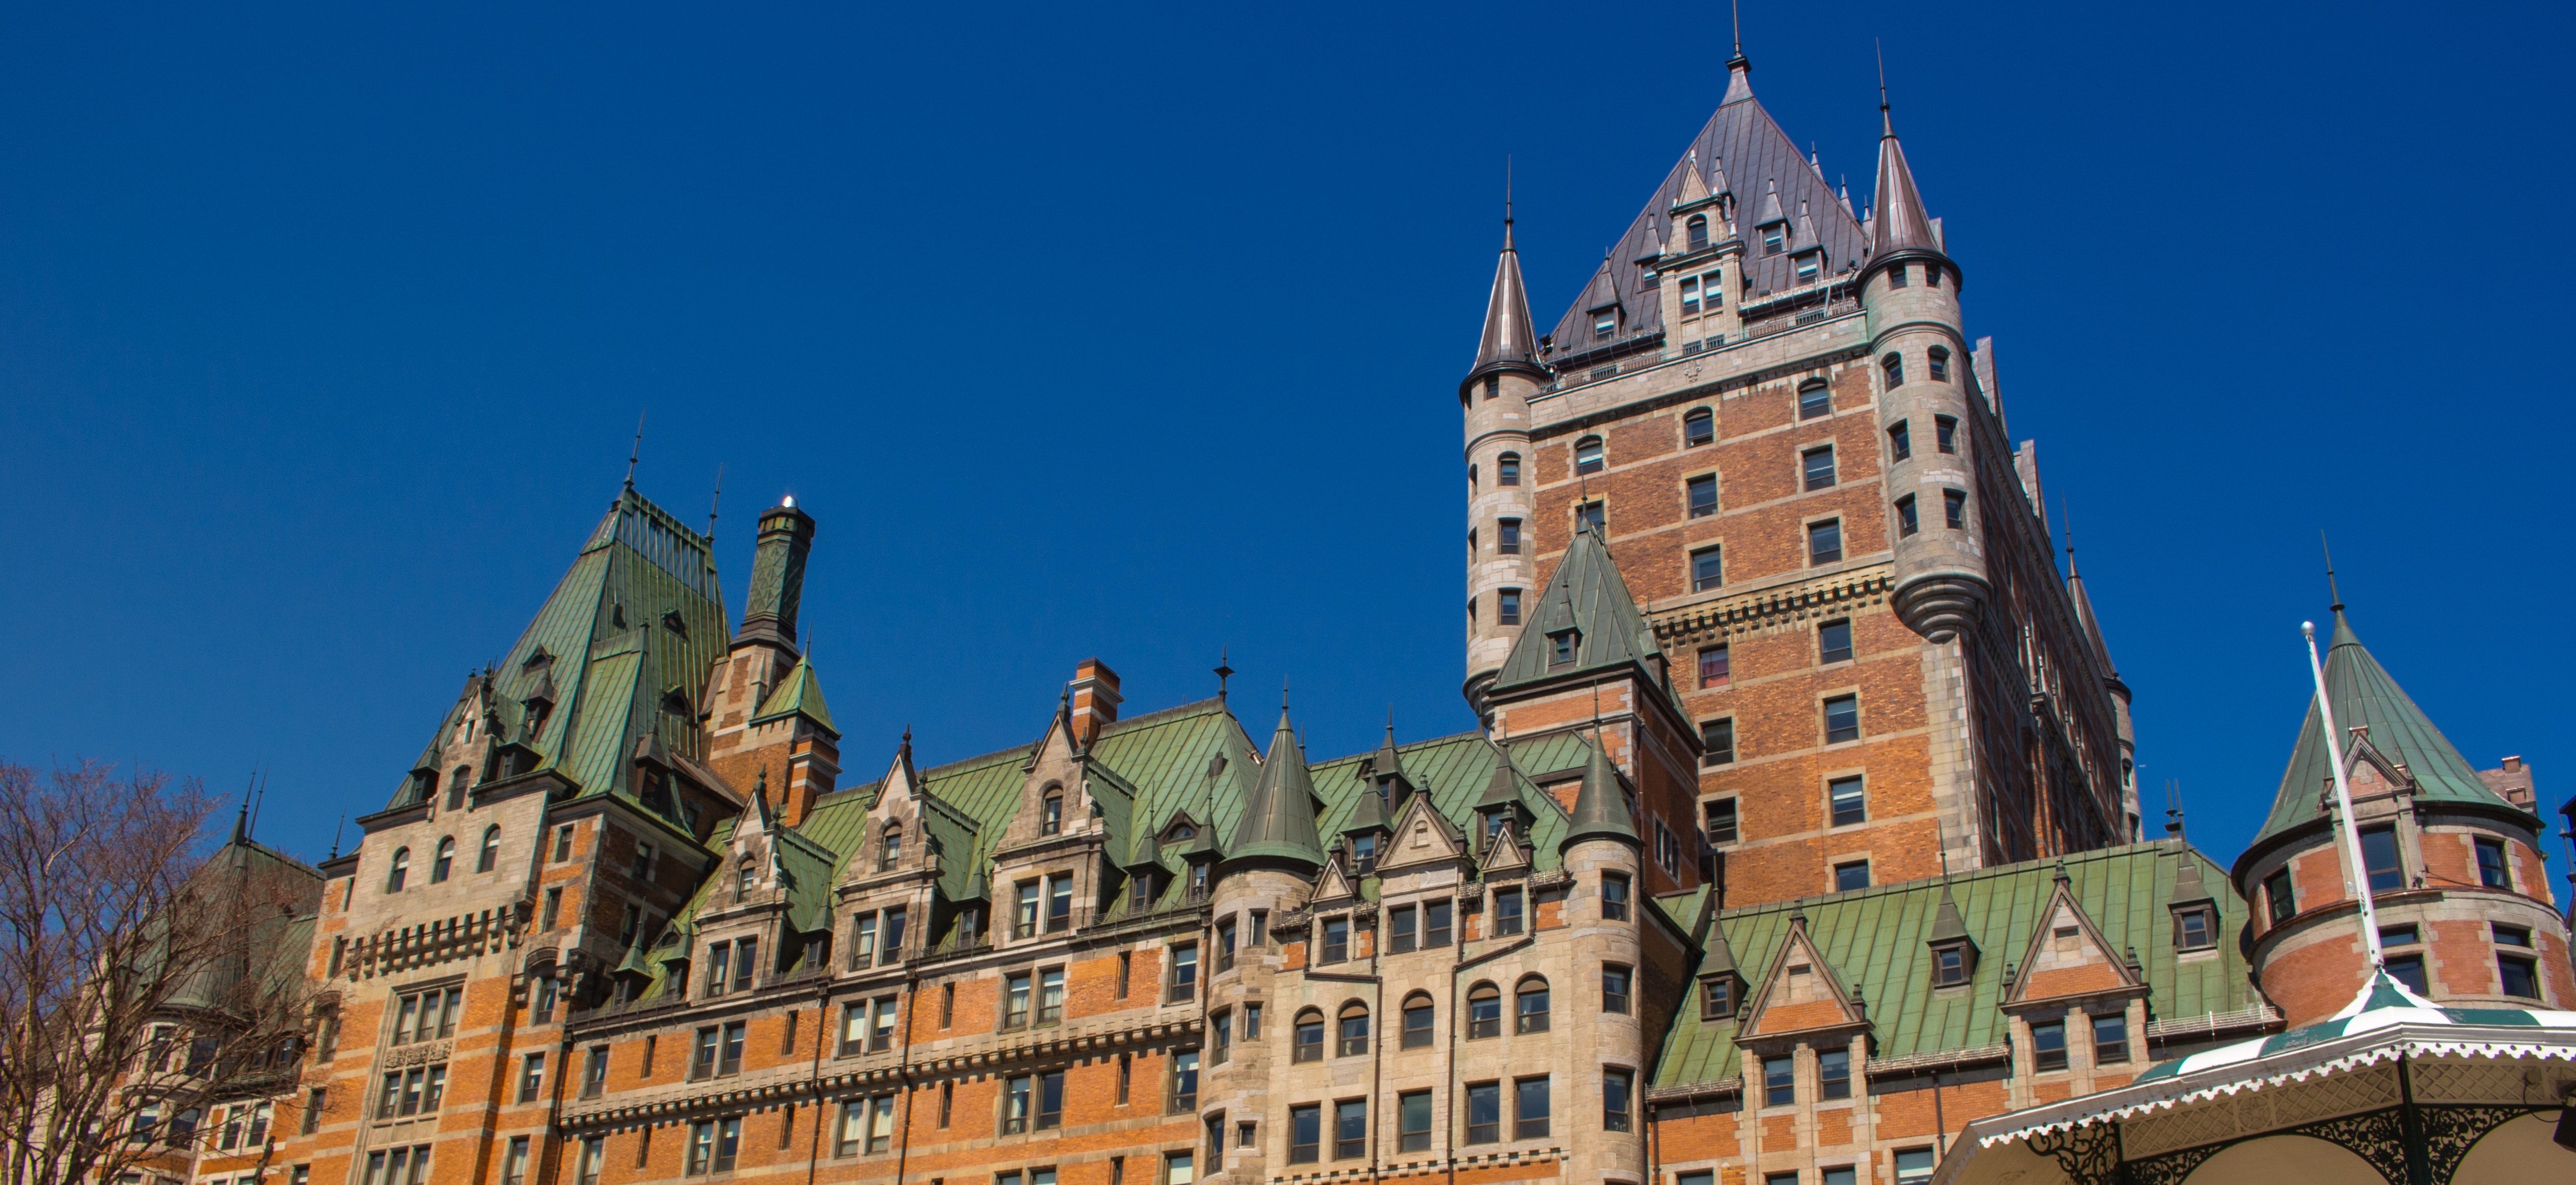 Hotel in Quebec City by Shawn Lee on Unsplash | Snag-A-Slip